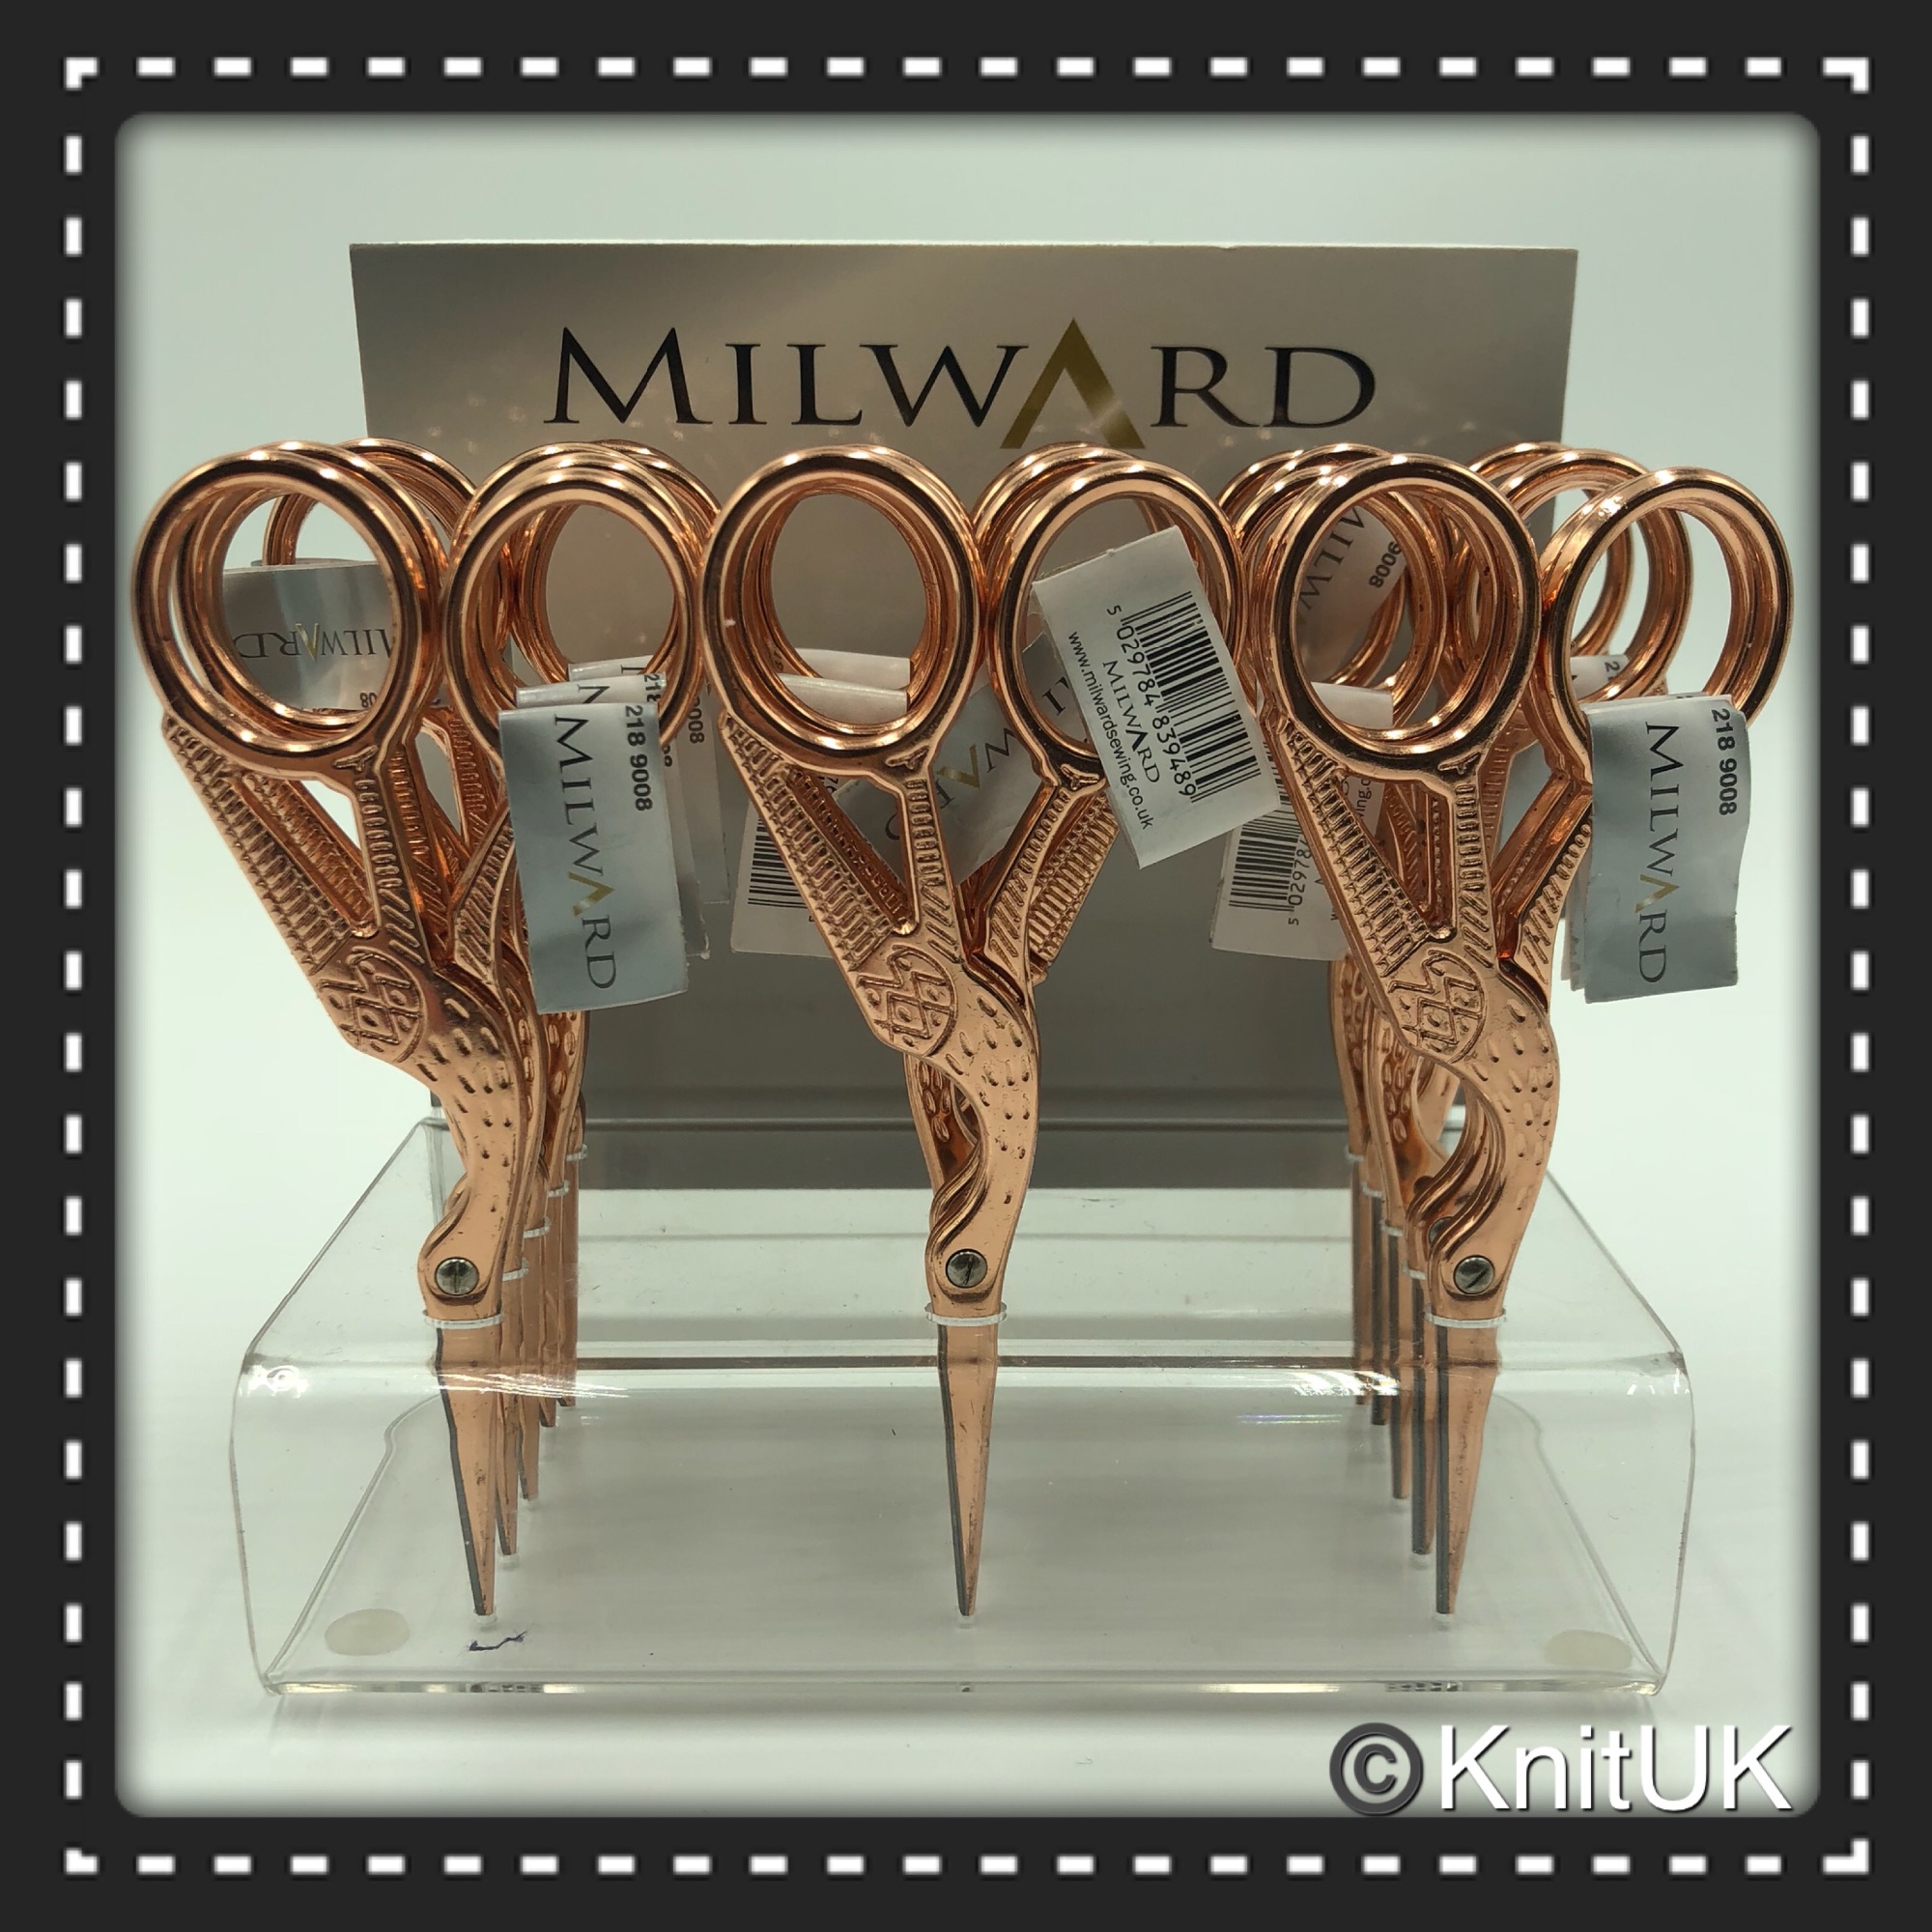 Milward rose gold stork scissors standing